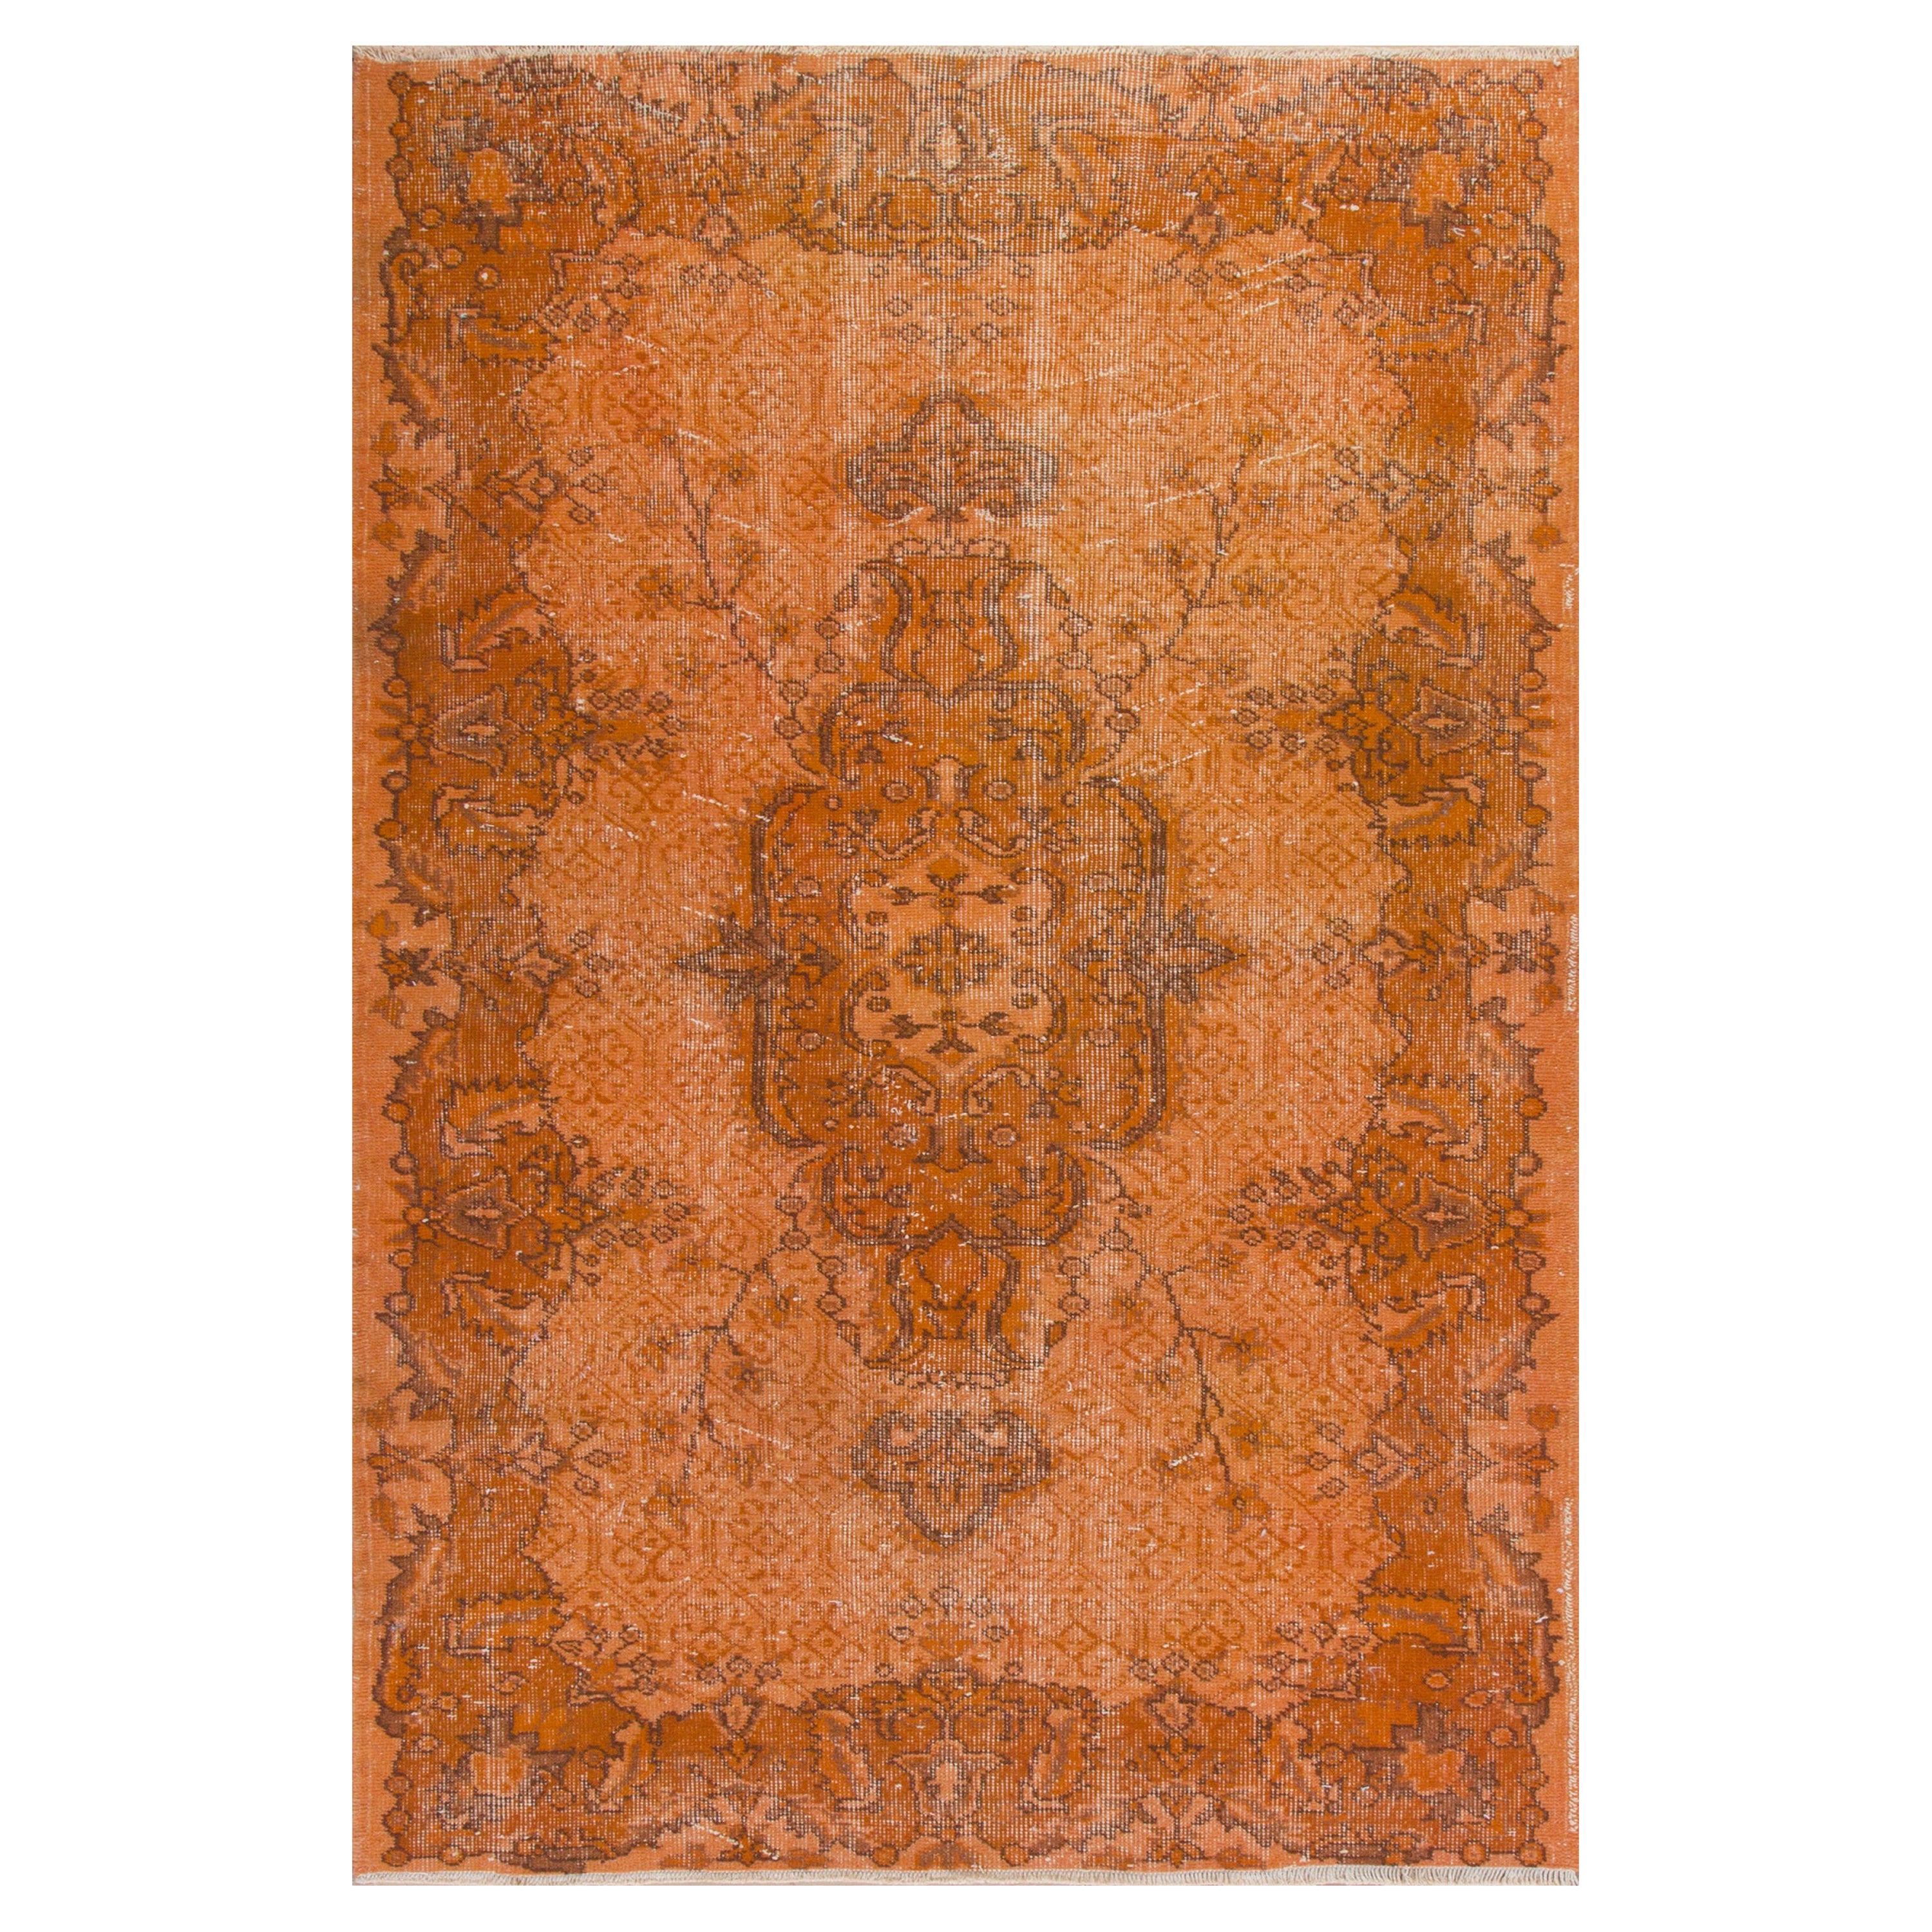 3.8x7.2 ft Orange Accent Rug for Modern Home & Office, Turkish Handmade Carpet